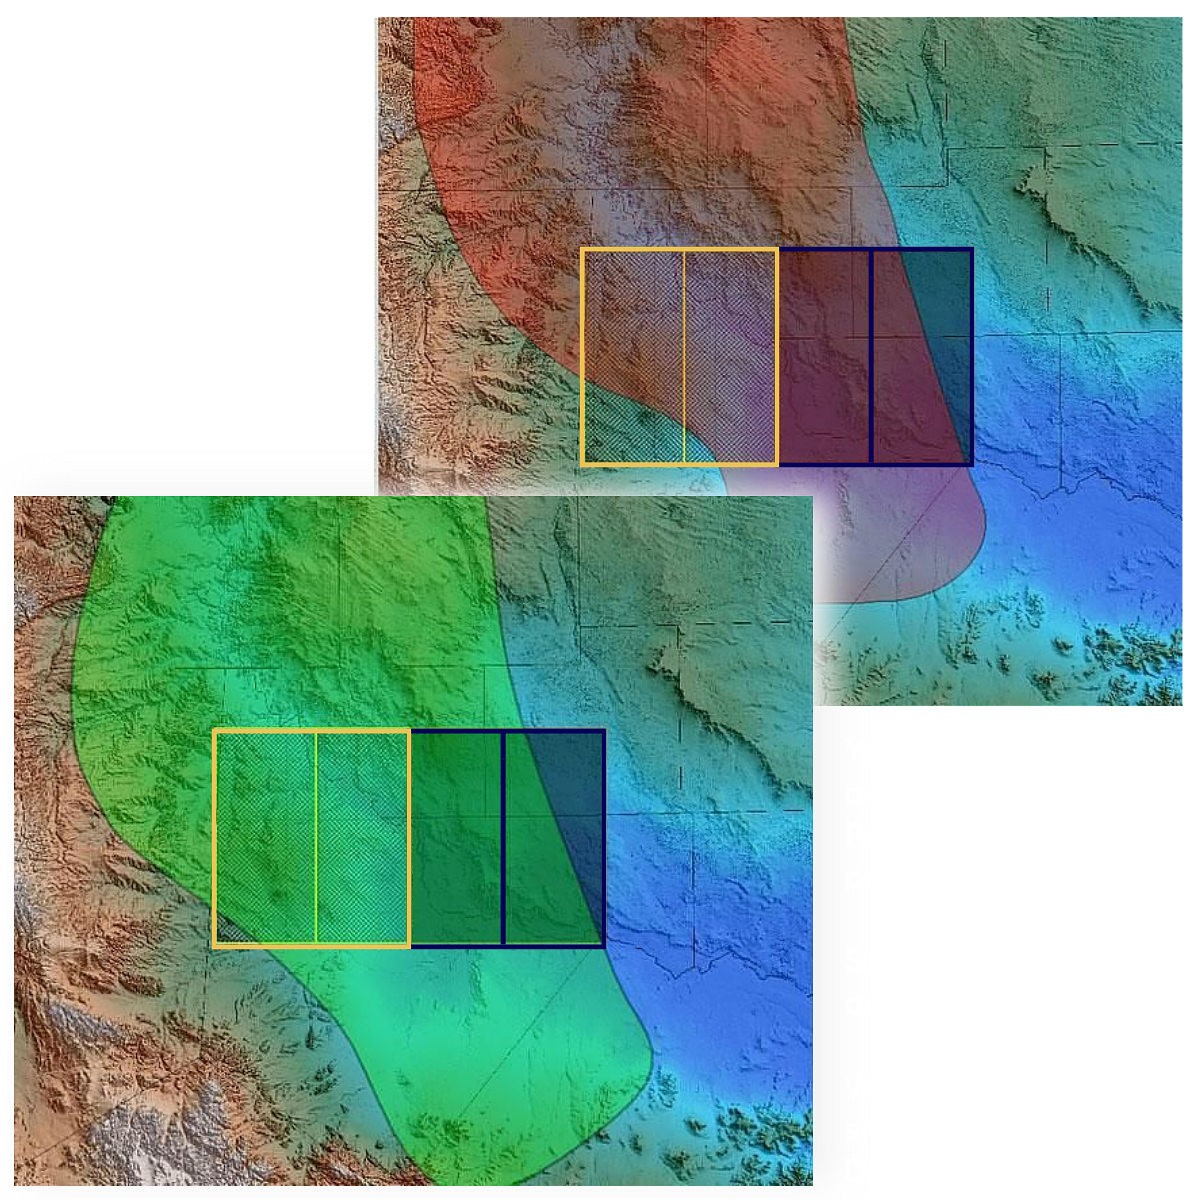 De-risk Karsts with Permian Basin FTG Data